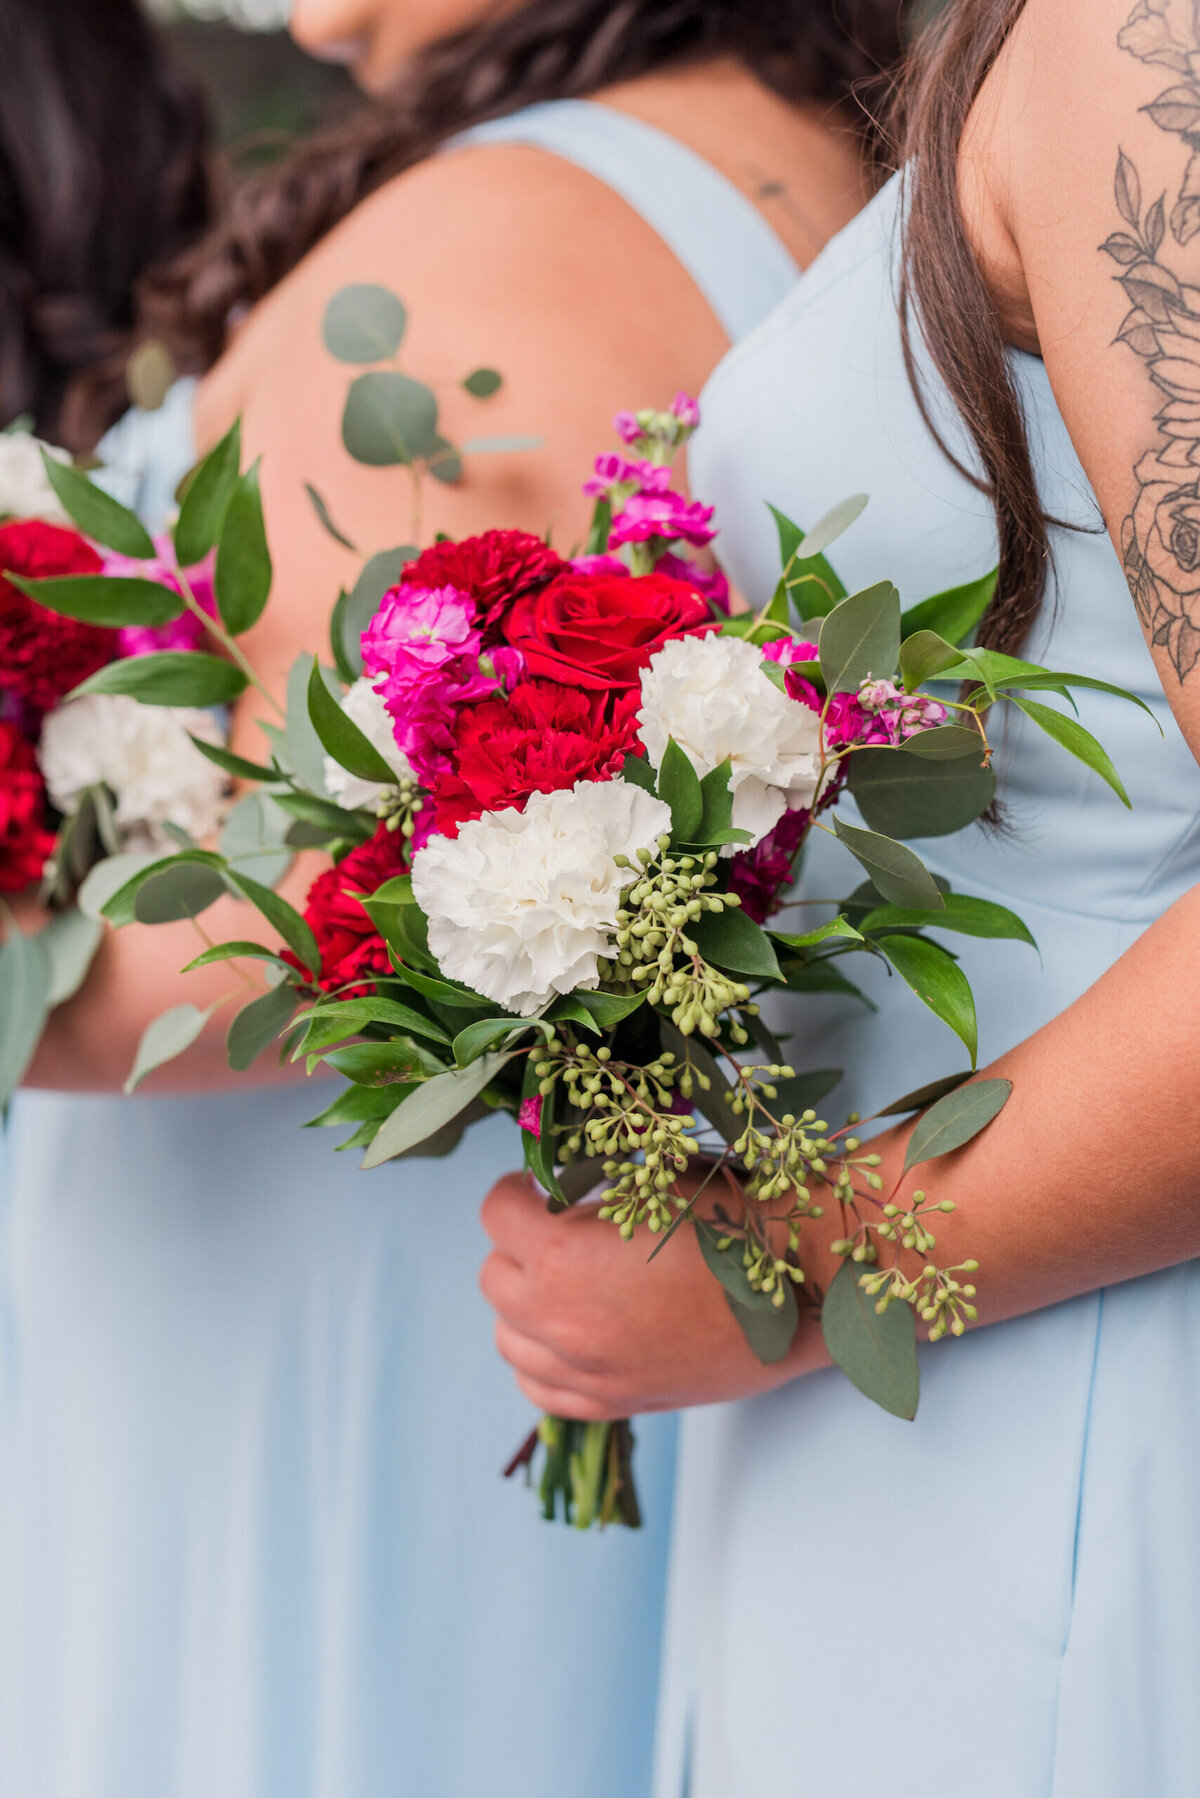 adriana_texas-old-town-austin-wedding-florist-36-scaled